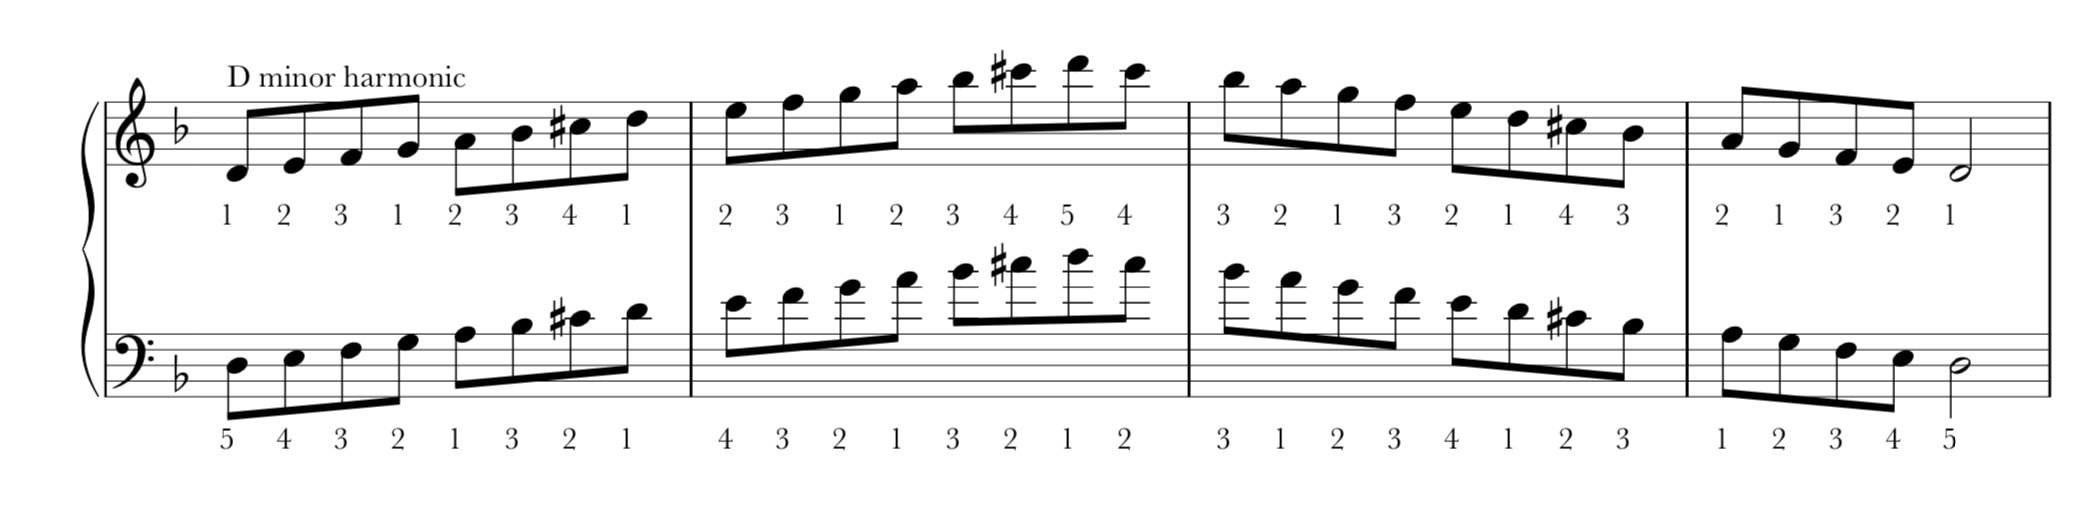 D Flat Harmonic Minor Scale